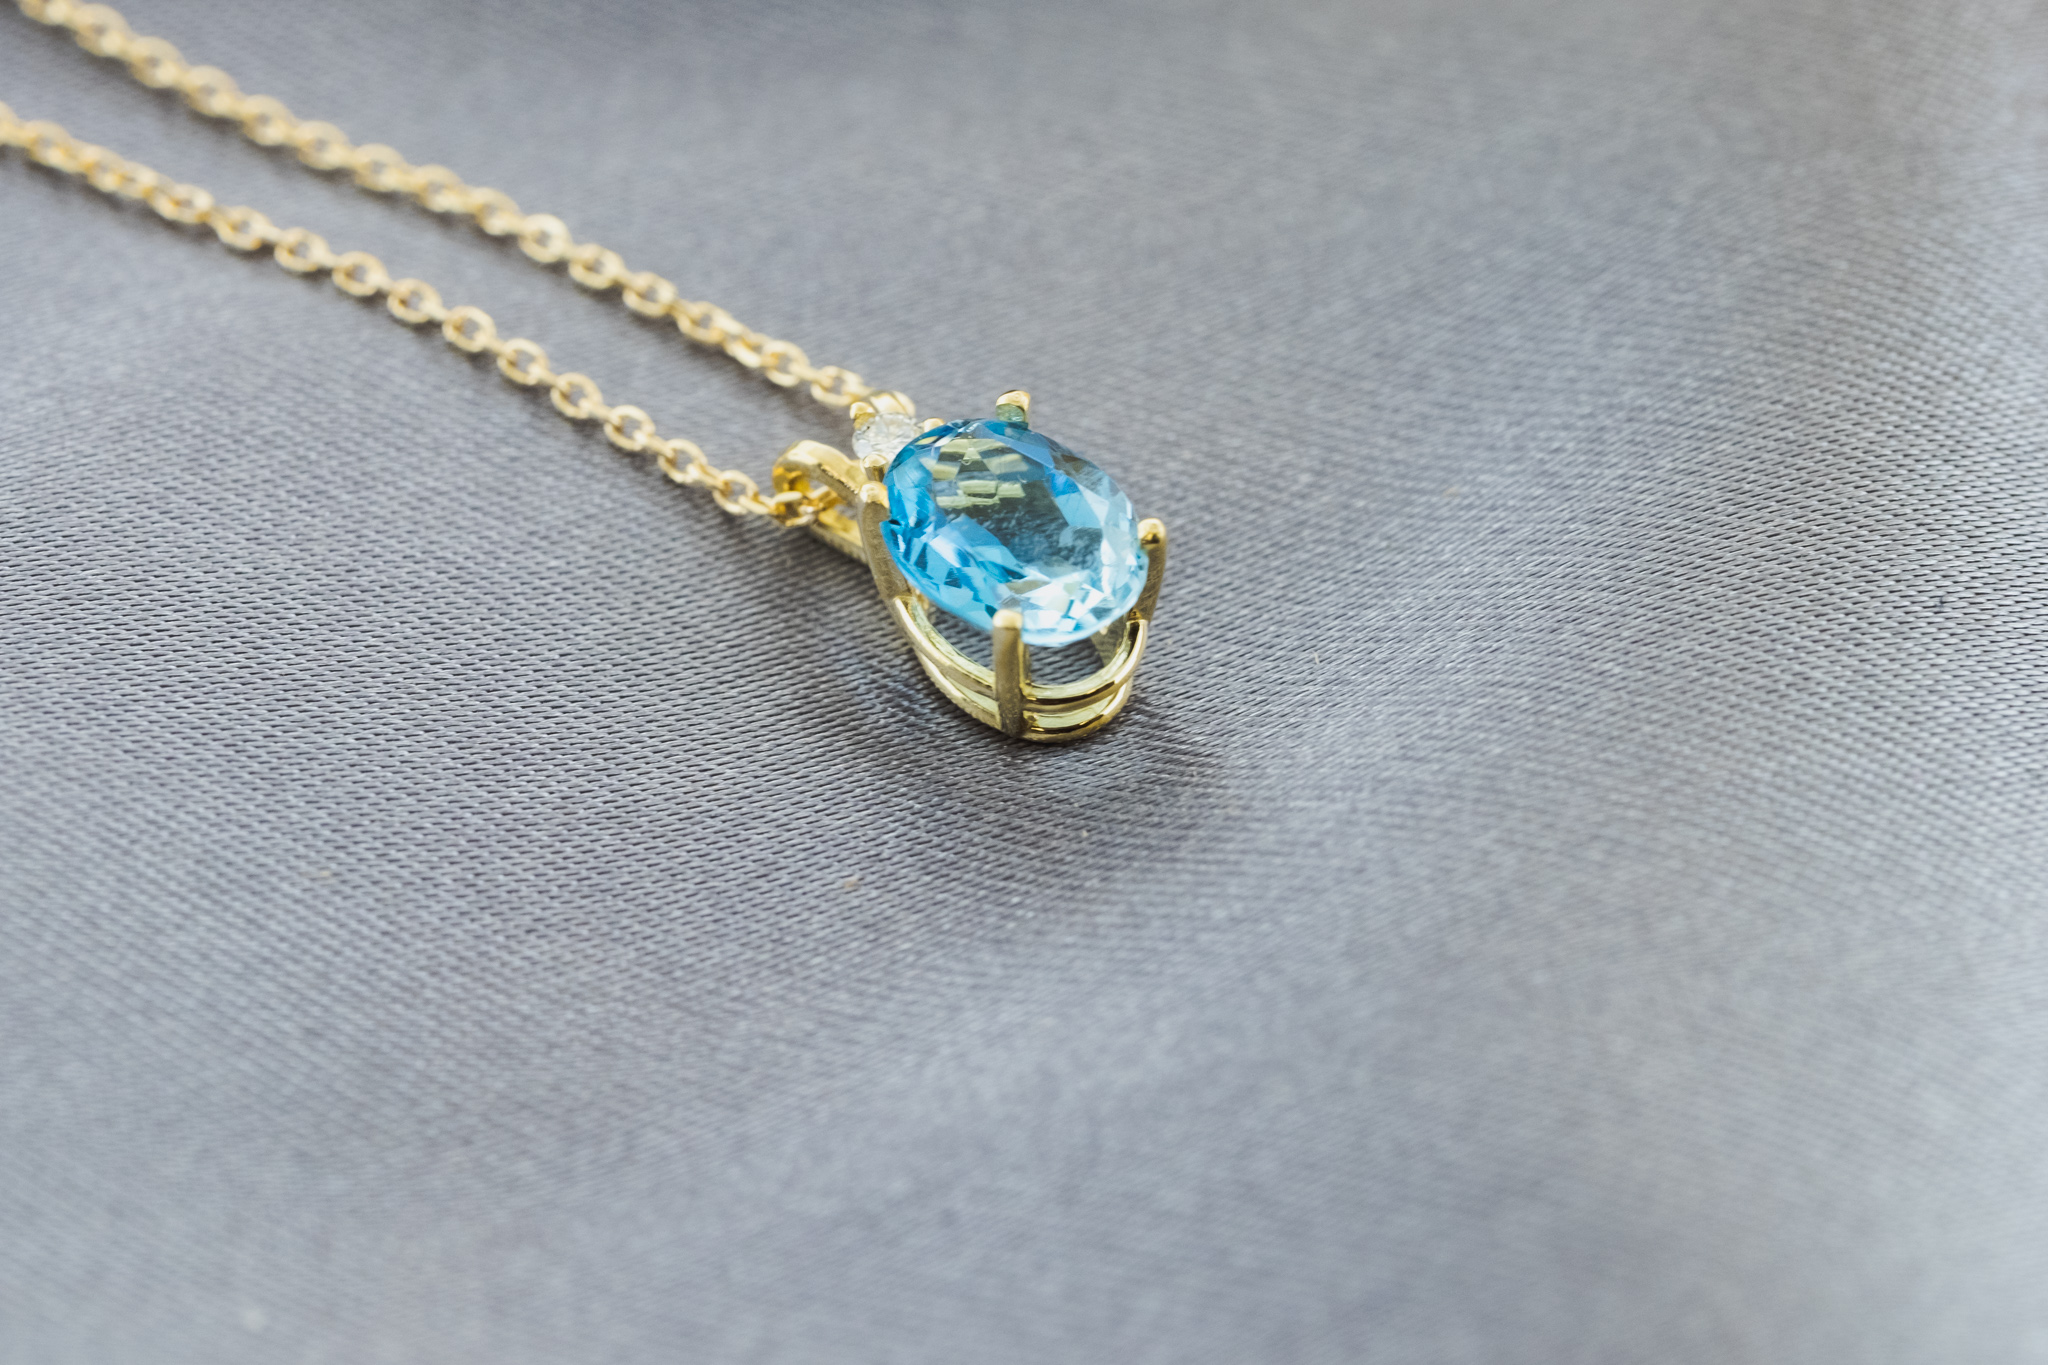 Aquamarine Briolette and Diamond Necklace in 18 Karat White Gold